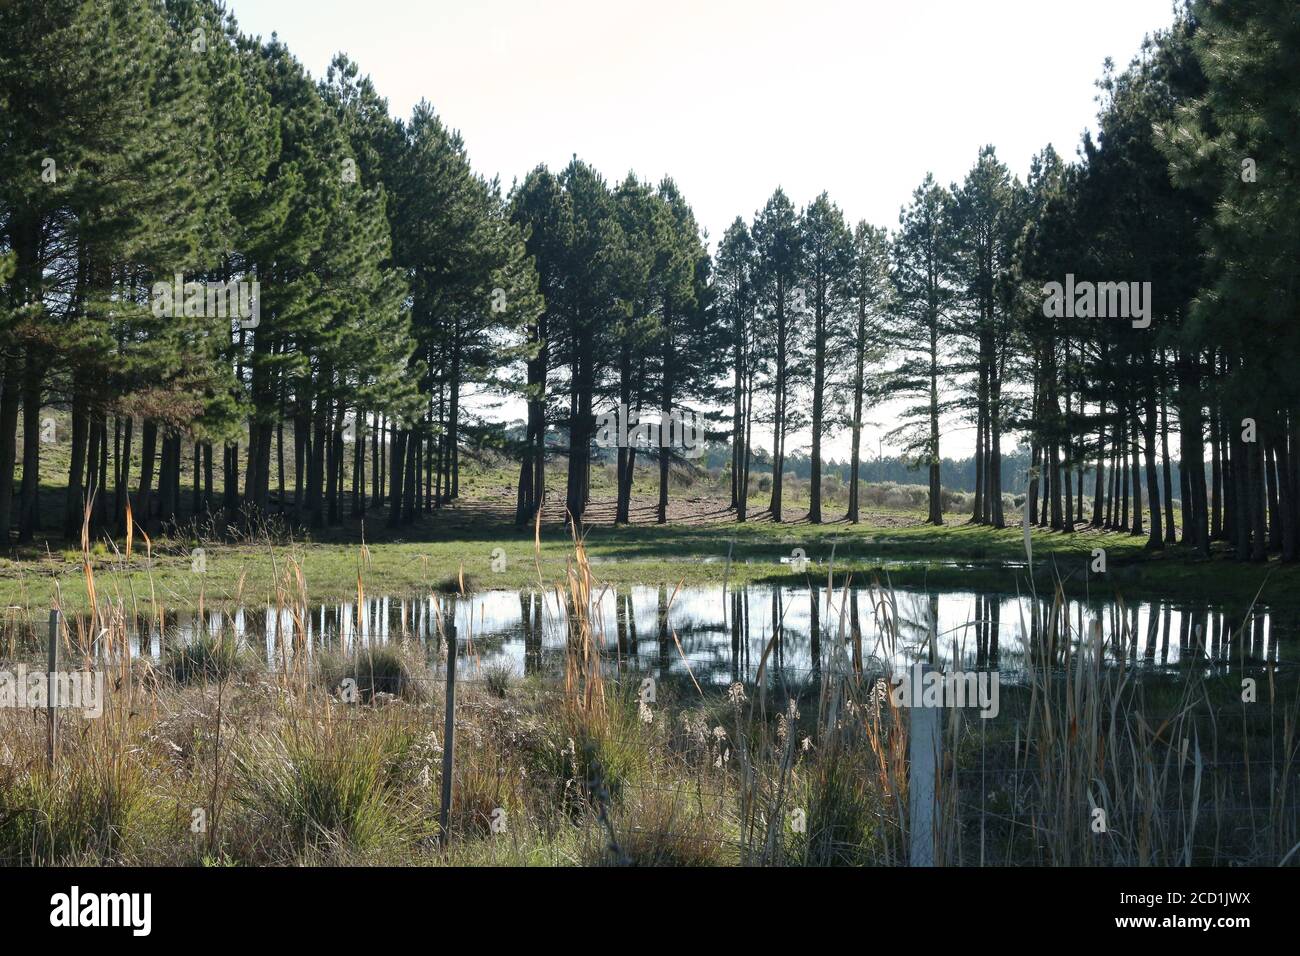 Reforestation wood - Pinus Elliotis. Large reforestation plantations and wood already cut for sale. Stock Photo